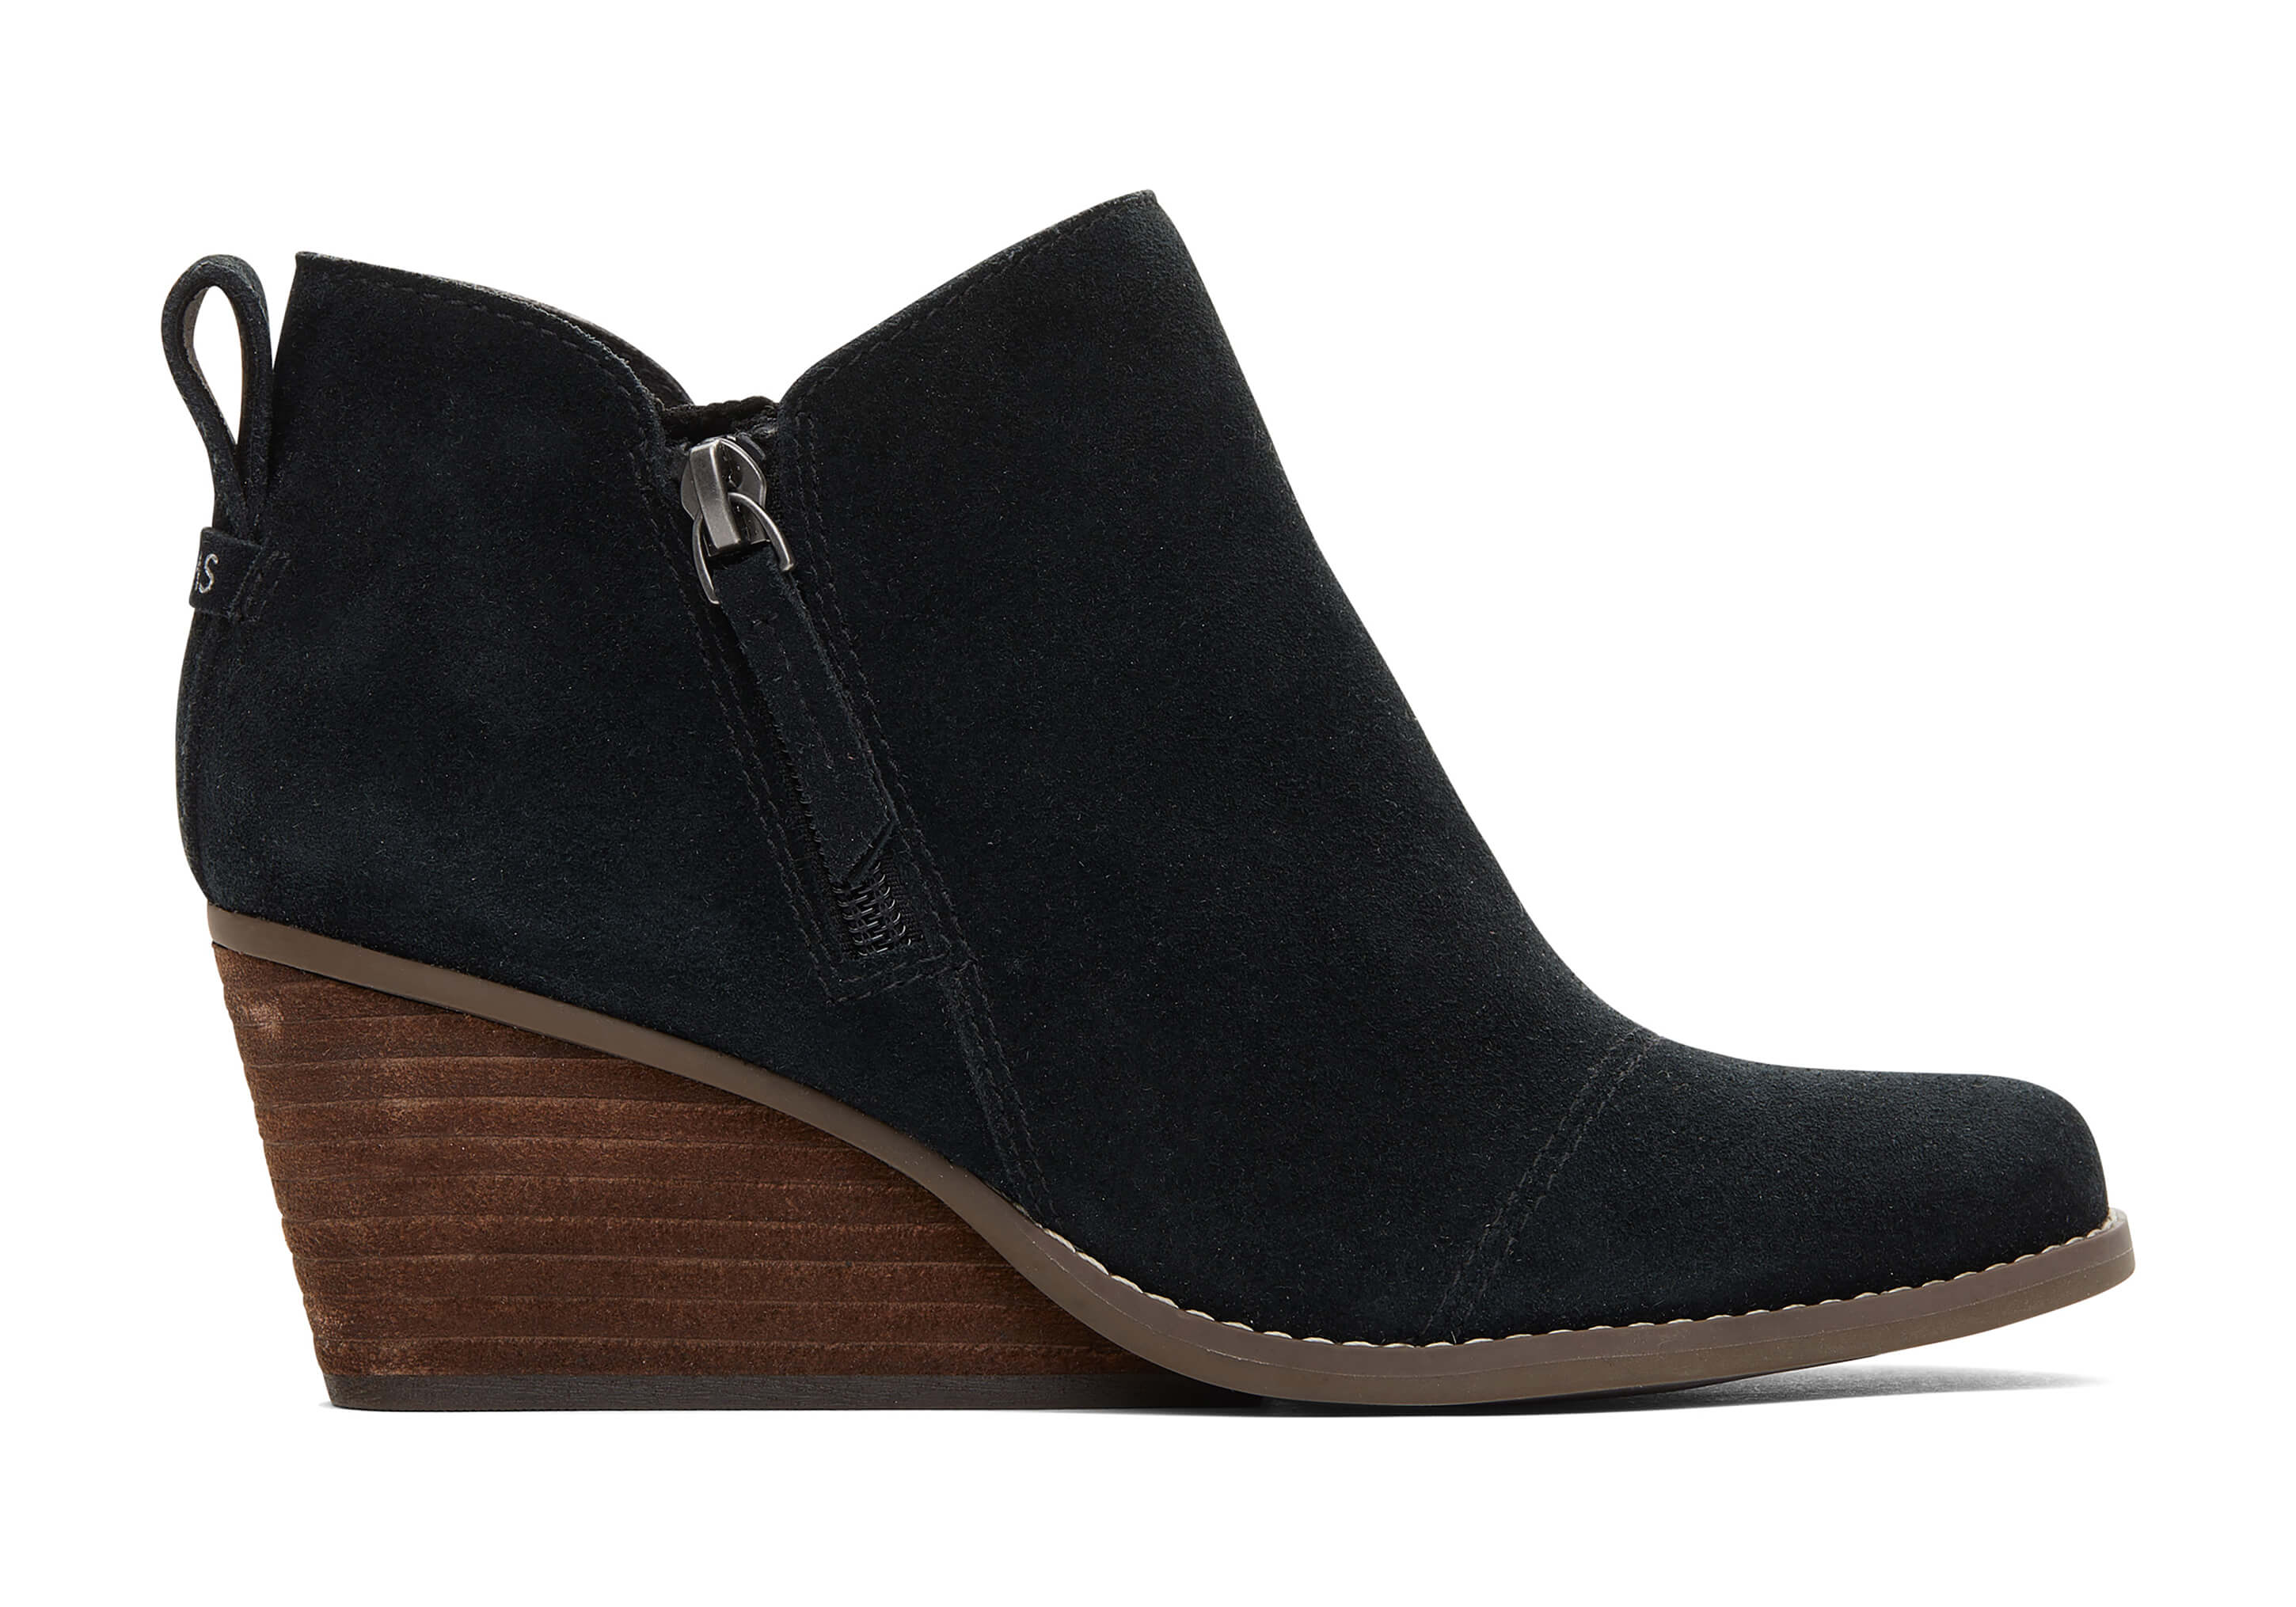 Women's Black Suede Goldie Boots, Size 6.5 | Toms Official Site - Shoes, Accessories, & Apparel